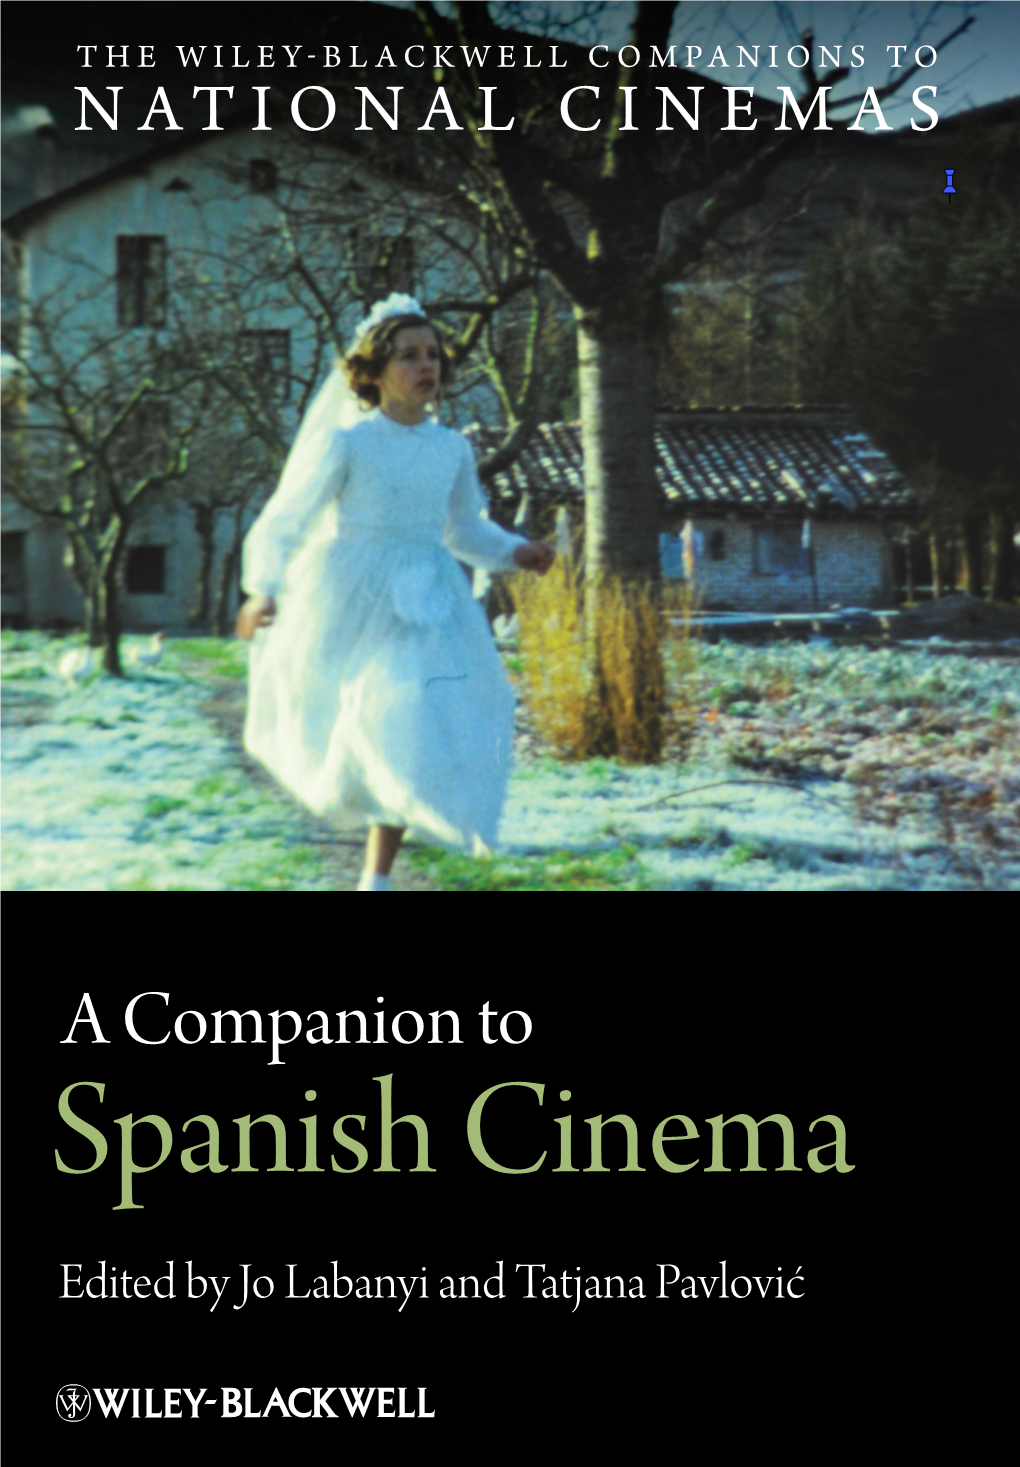 A Companion to Spanish Cinema Wiley-Blackwell Companions to National Cinemas